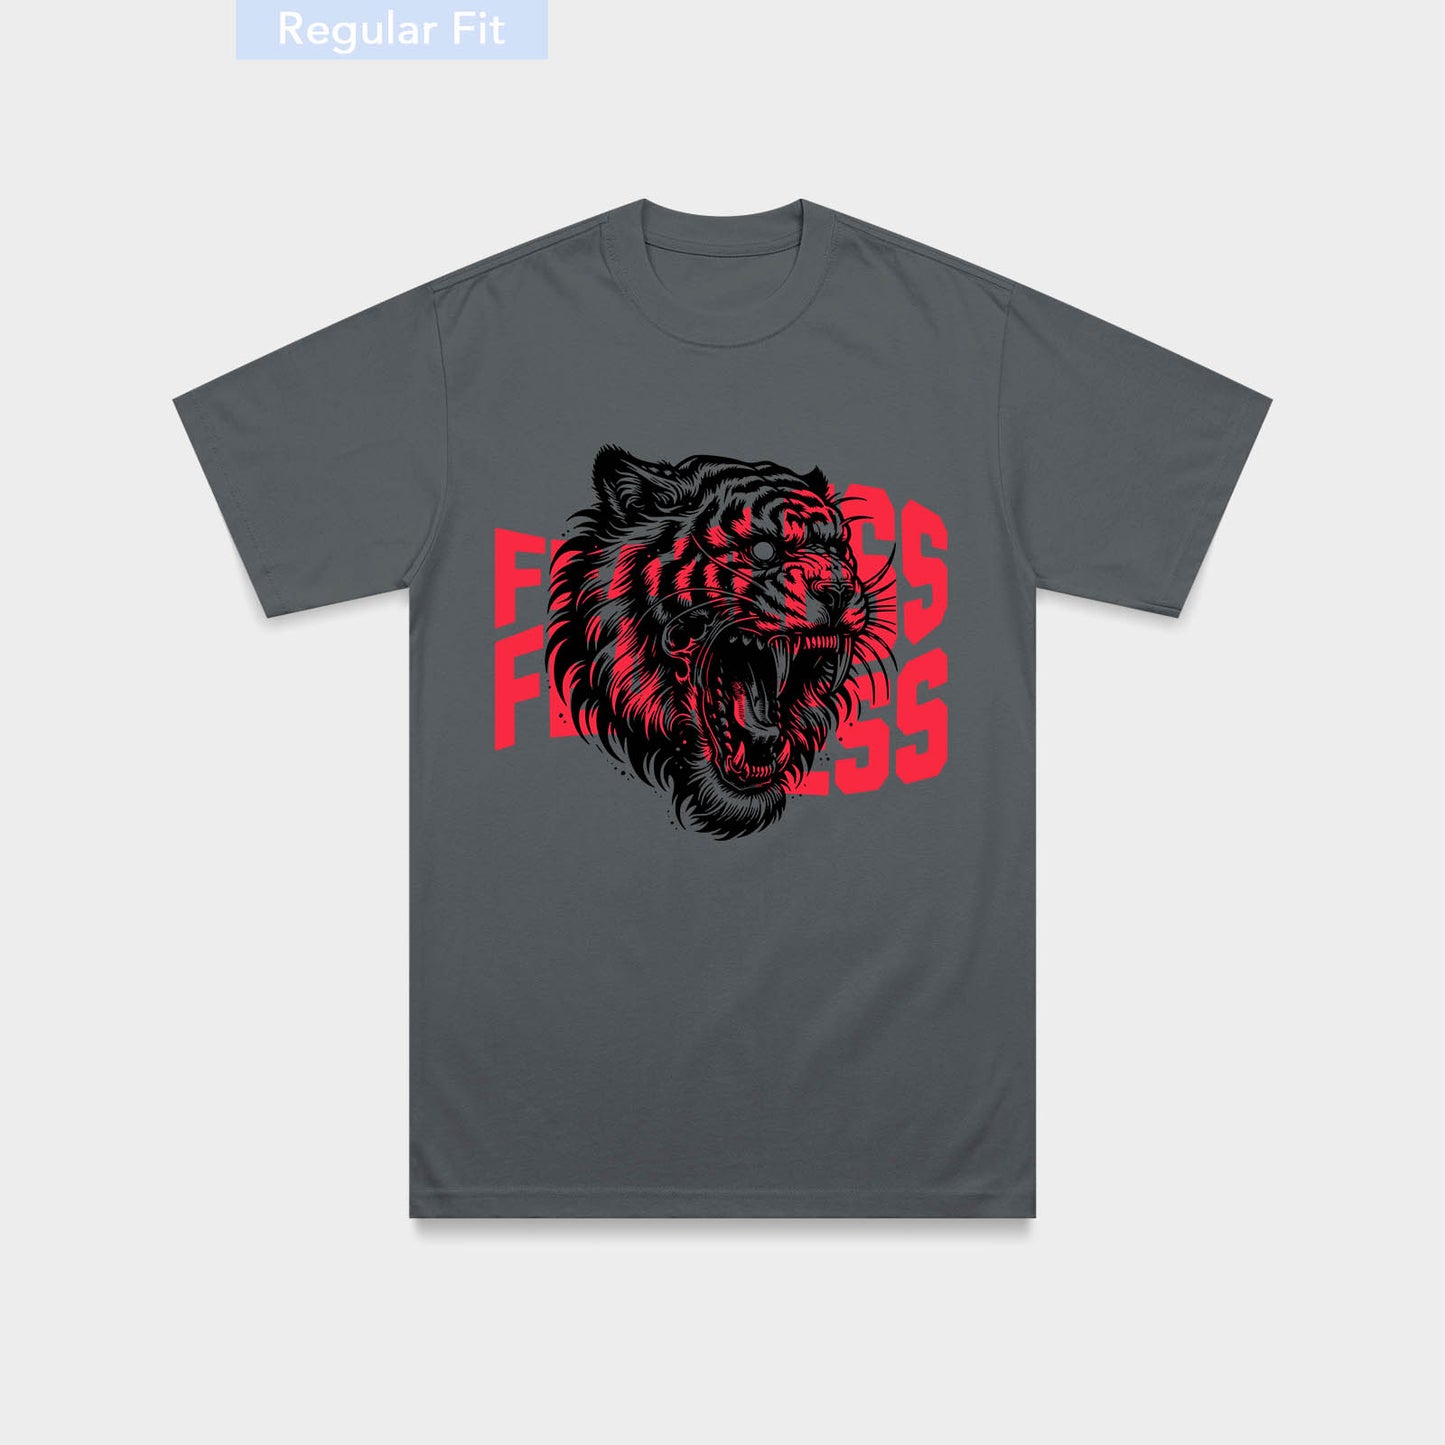 Fierce Black Tiger Graphic Tee - Fearless Gray T-Shirt